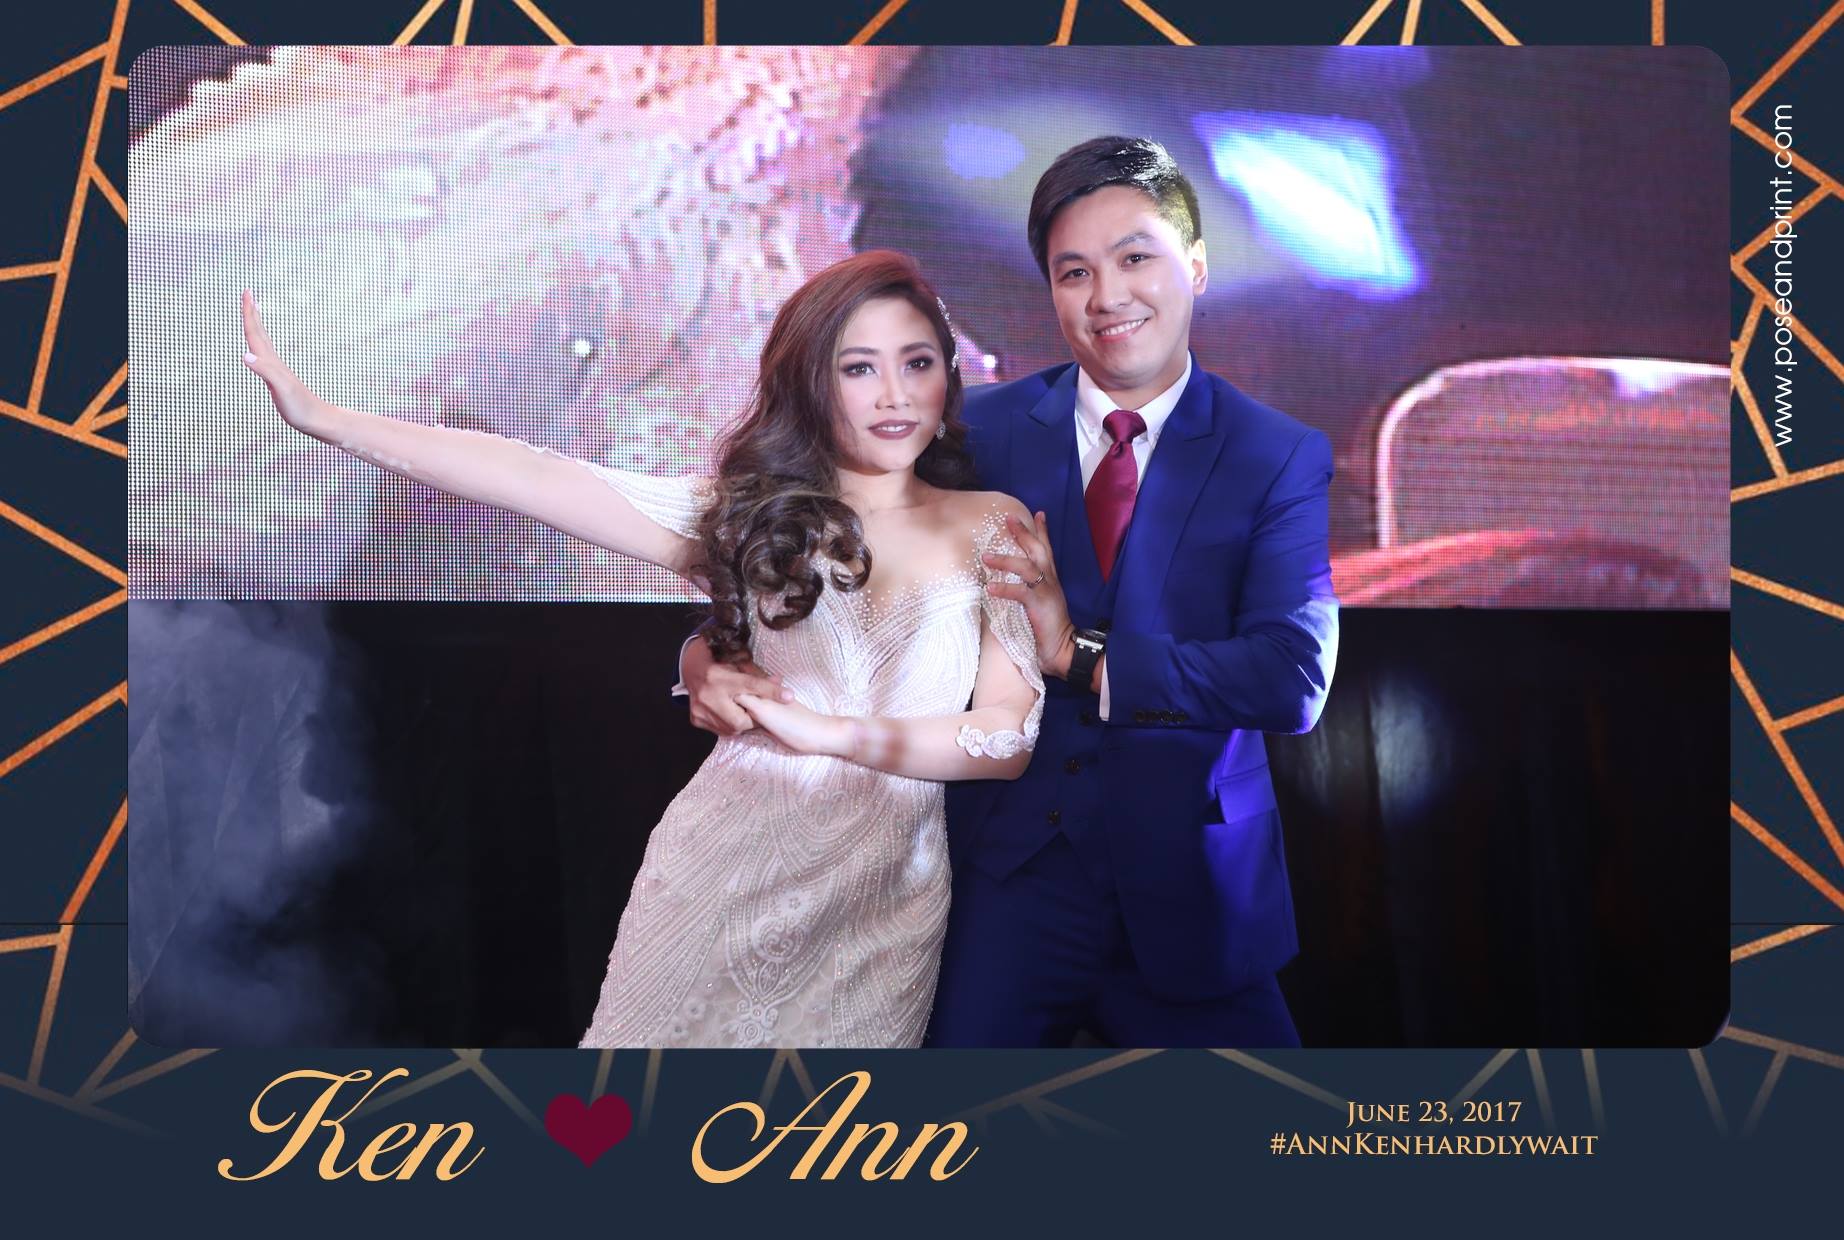 Ken and Ann’s Wedding – Photoman 2